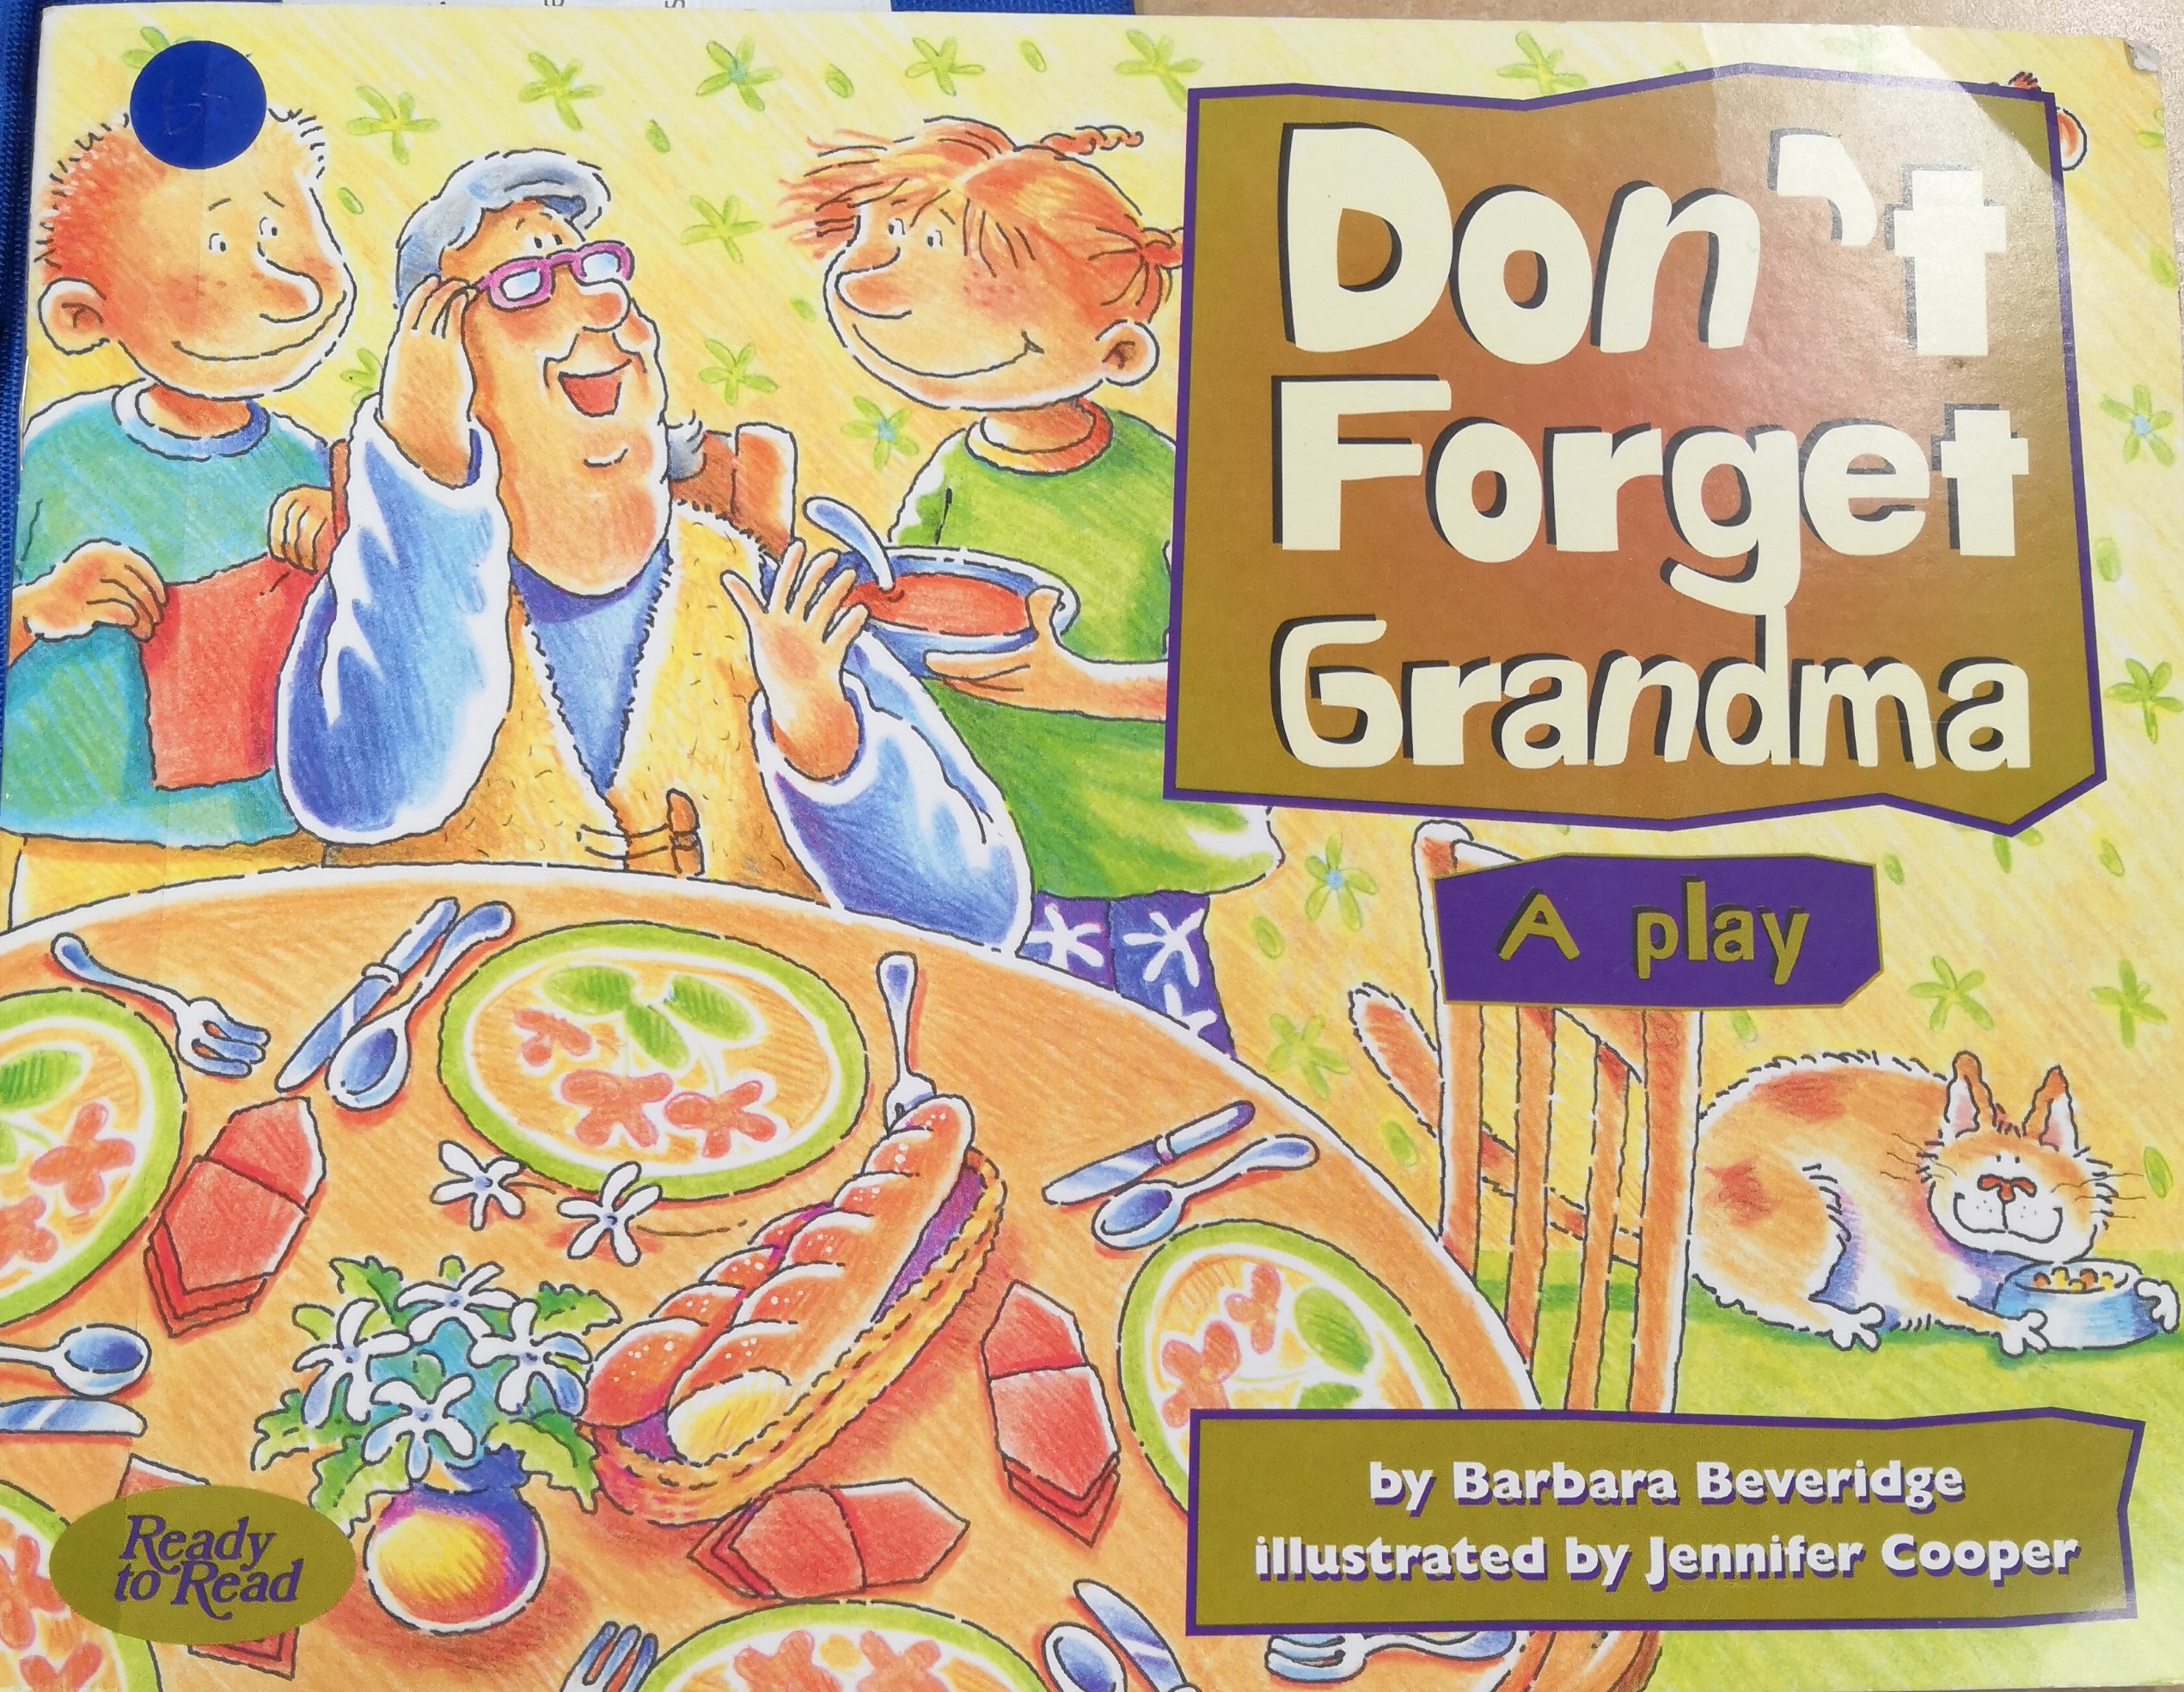 Don't forget Grandma